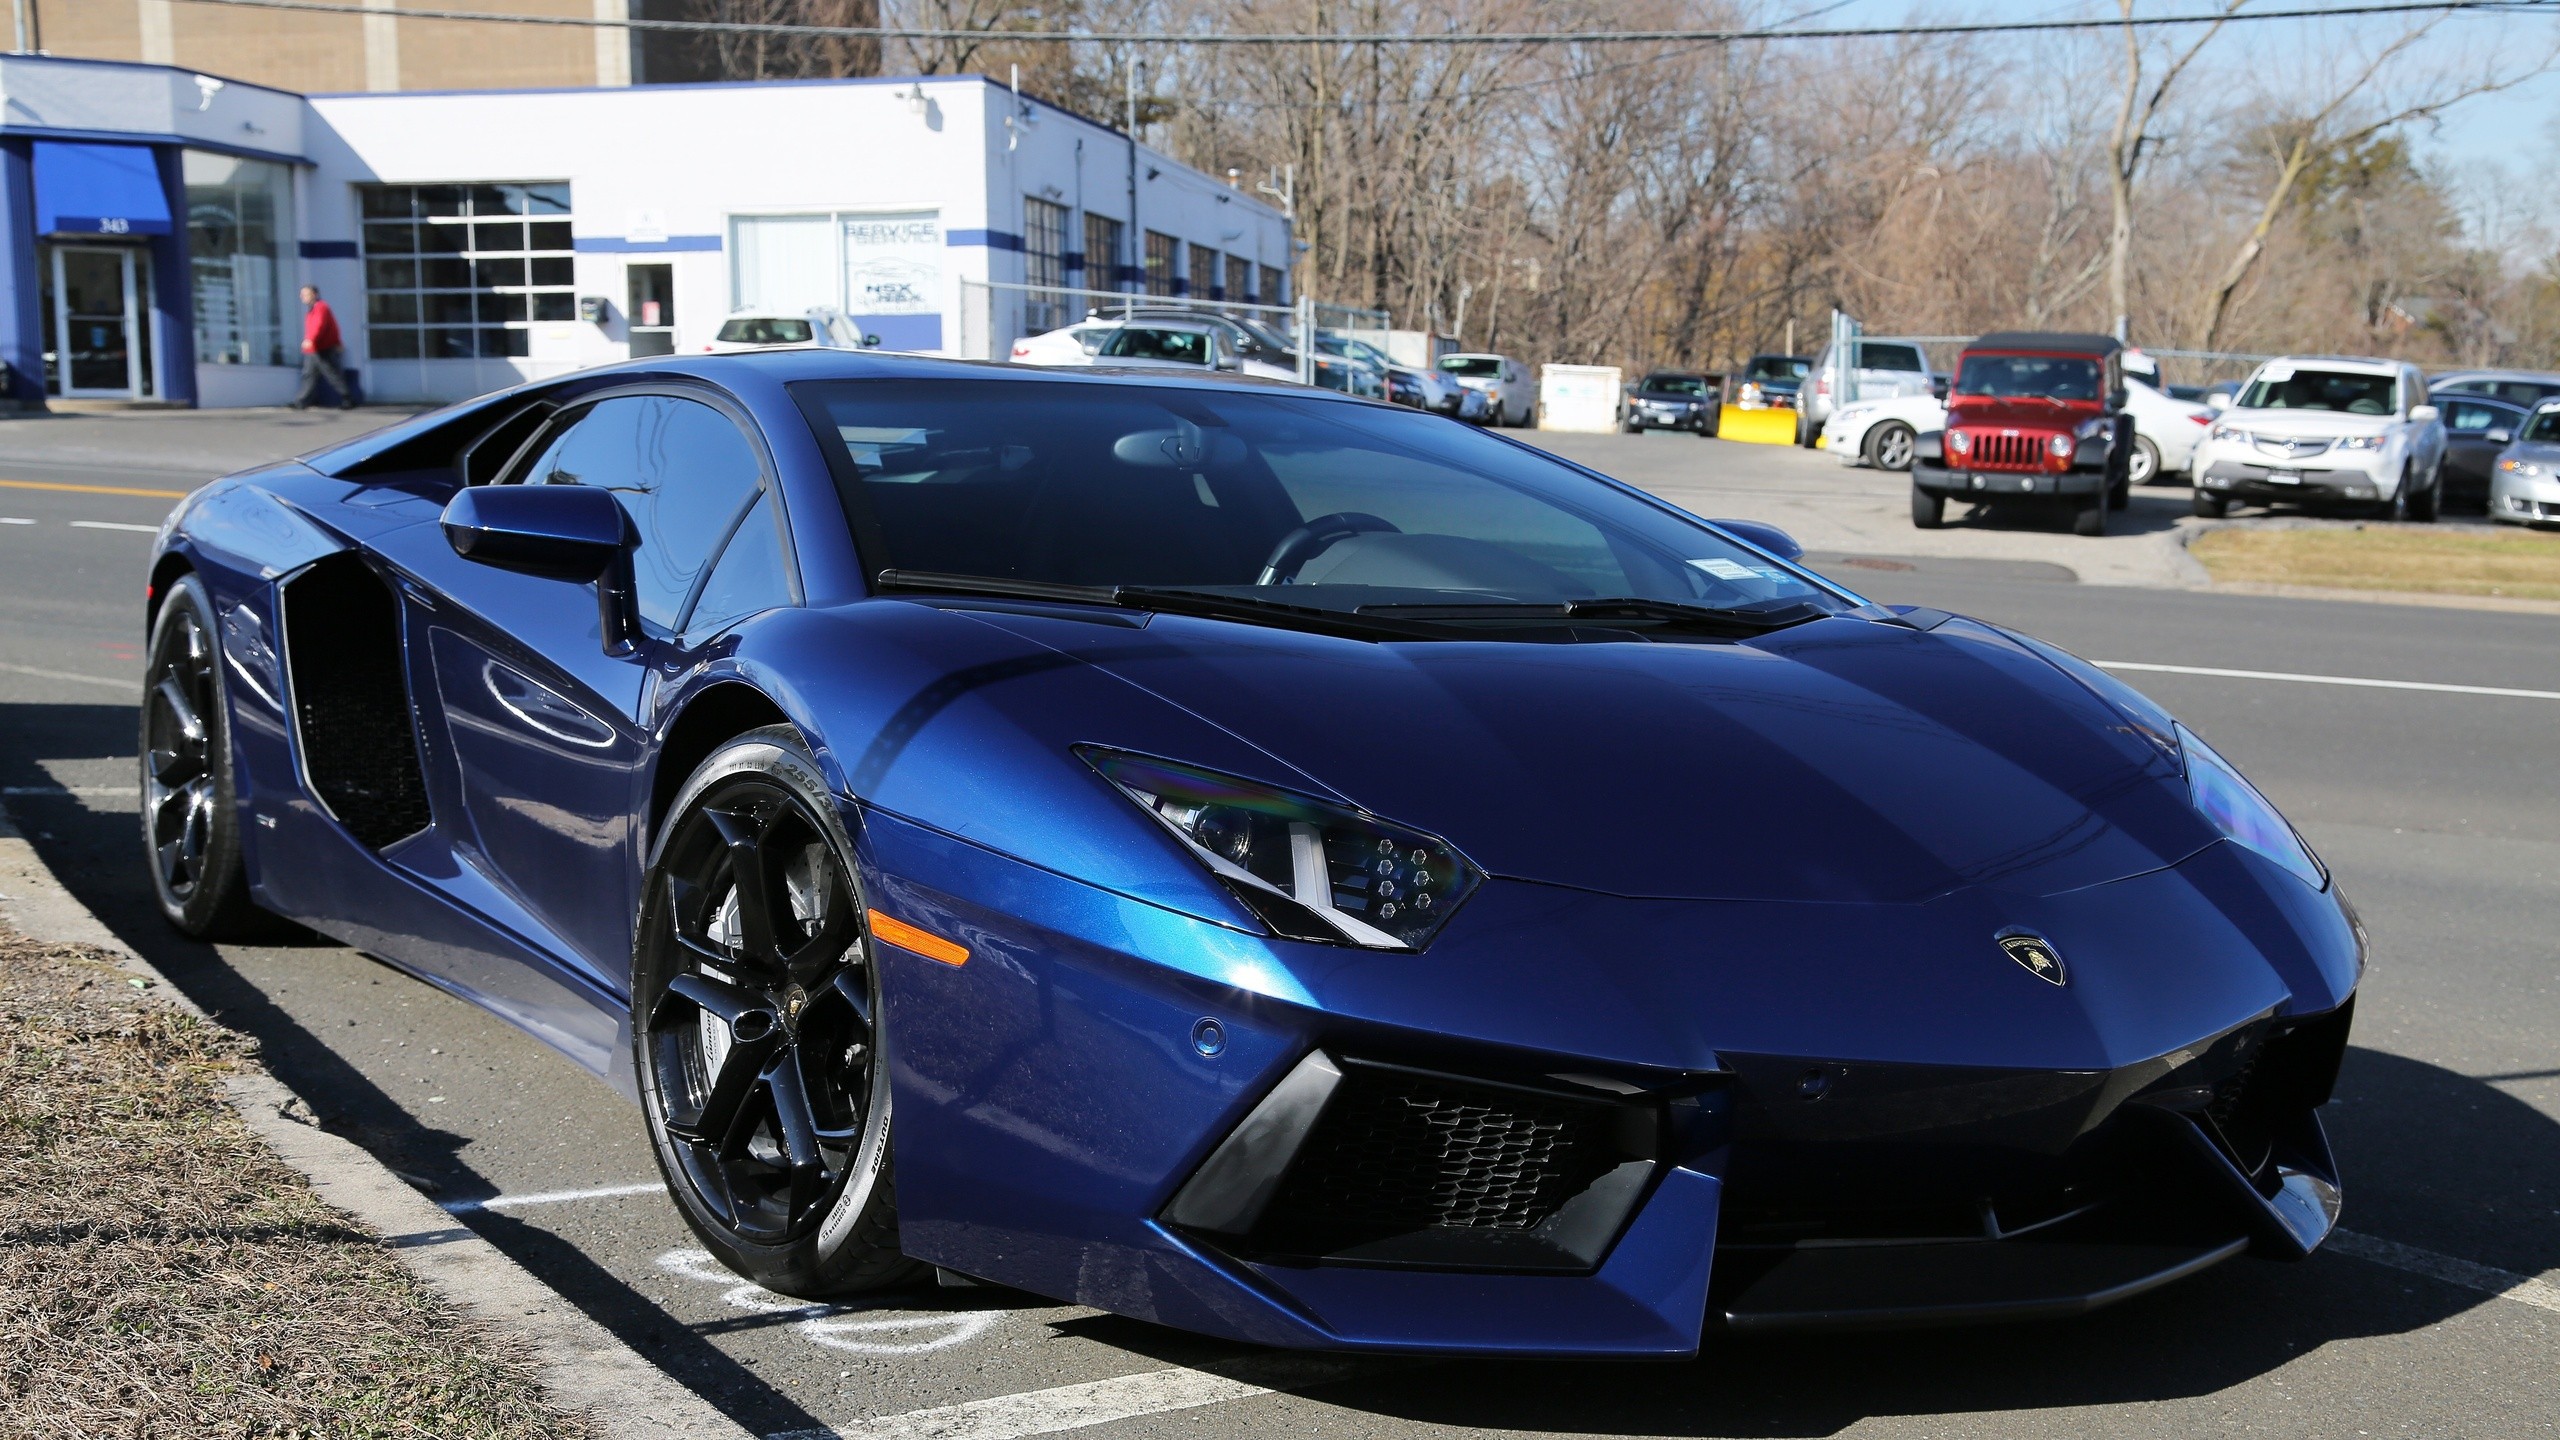 The dark blue car Lamborghini Aventador parked on the ...